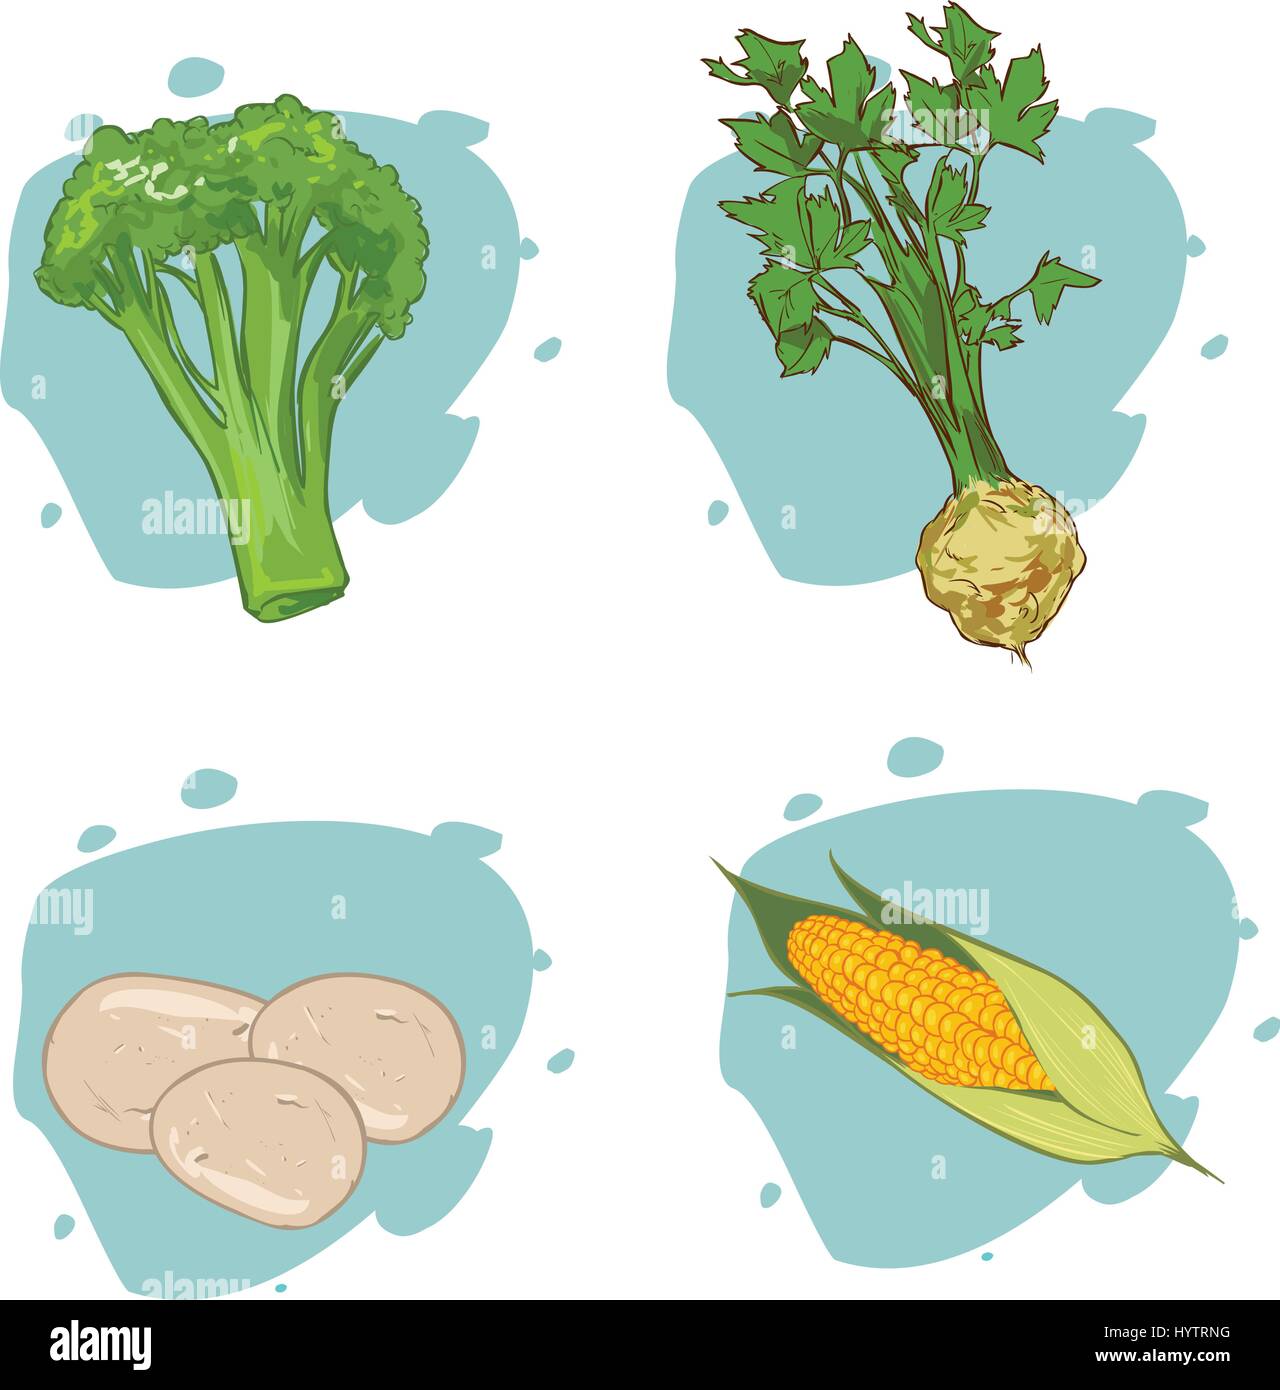 Vektor-Illustration von verschiedenem Gemüse Abbildung: Mais, Sellerie, Kartoffeln, Brokkoli Stock Vektor